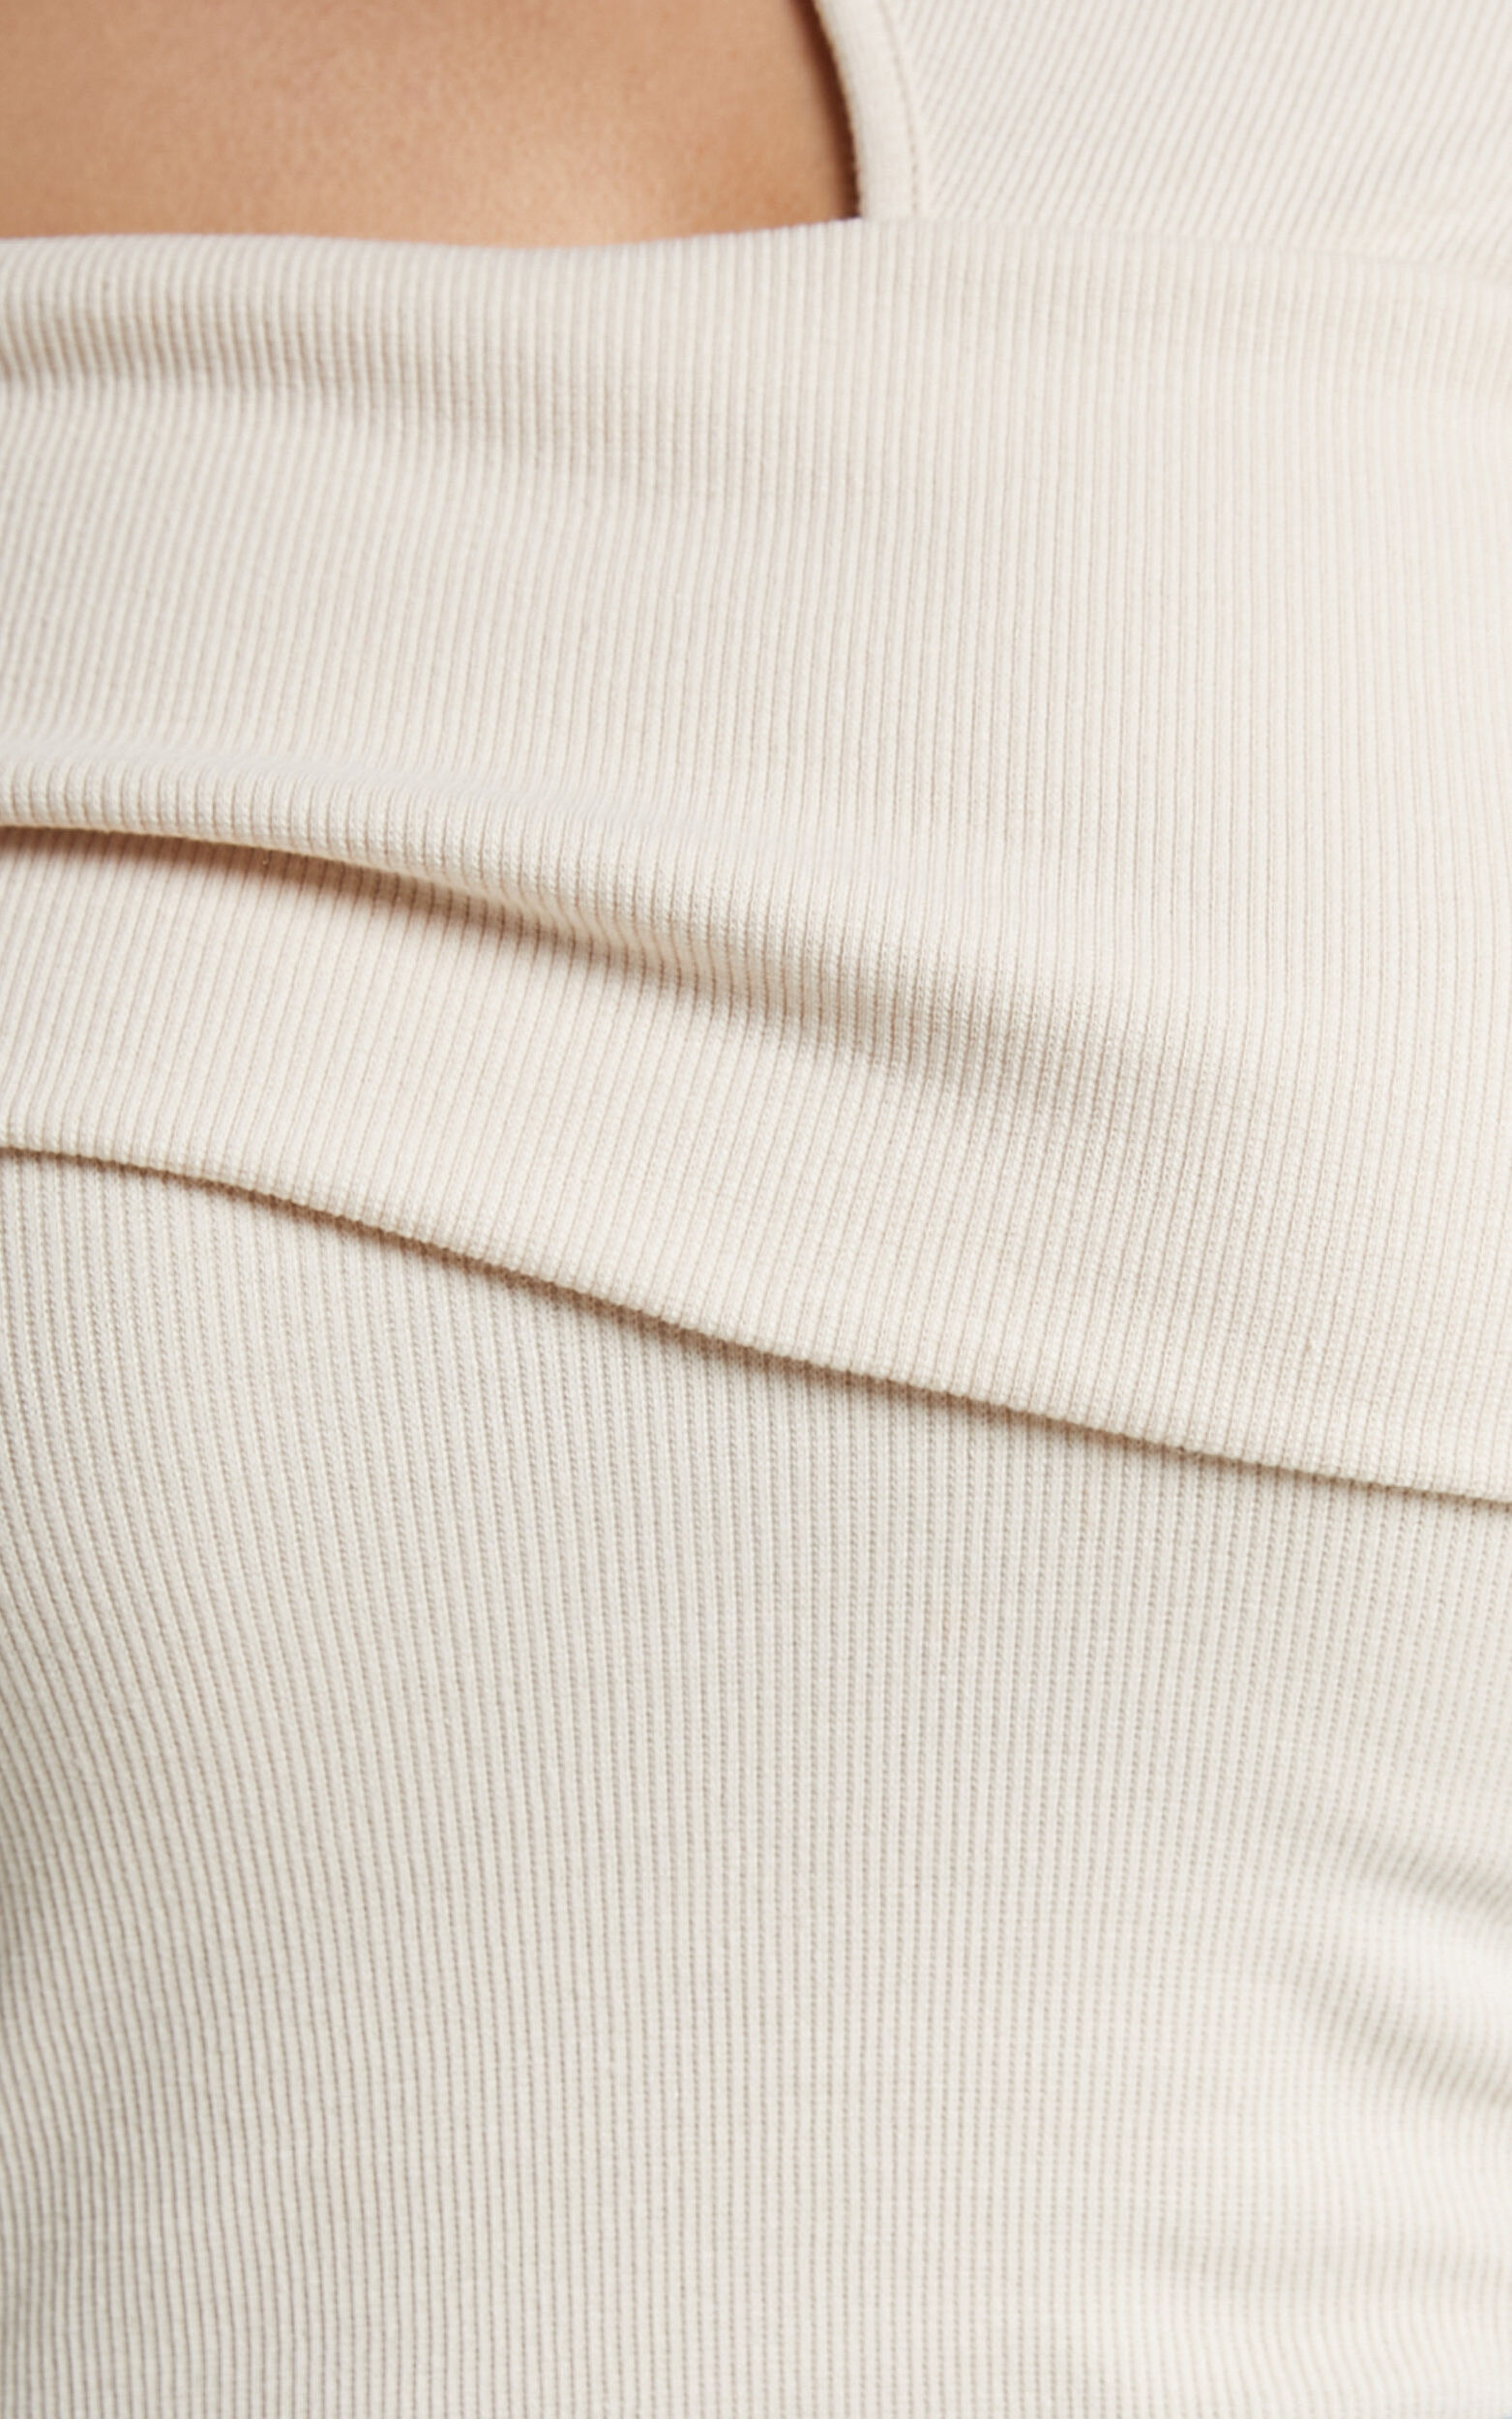 Kiefer Top - Asymmetric Long Sleeve Cutout Top in Cream